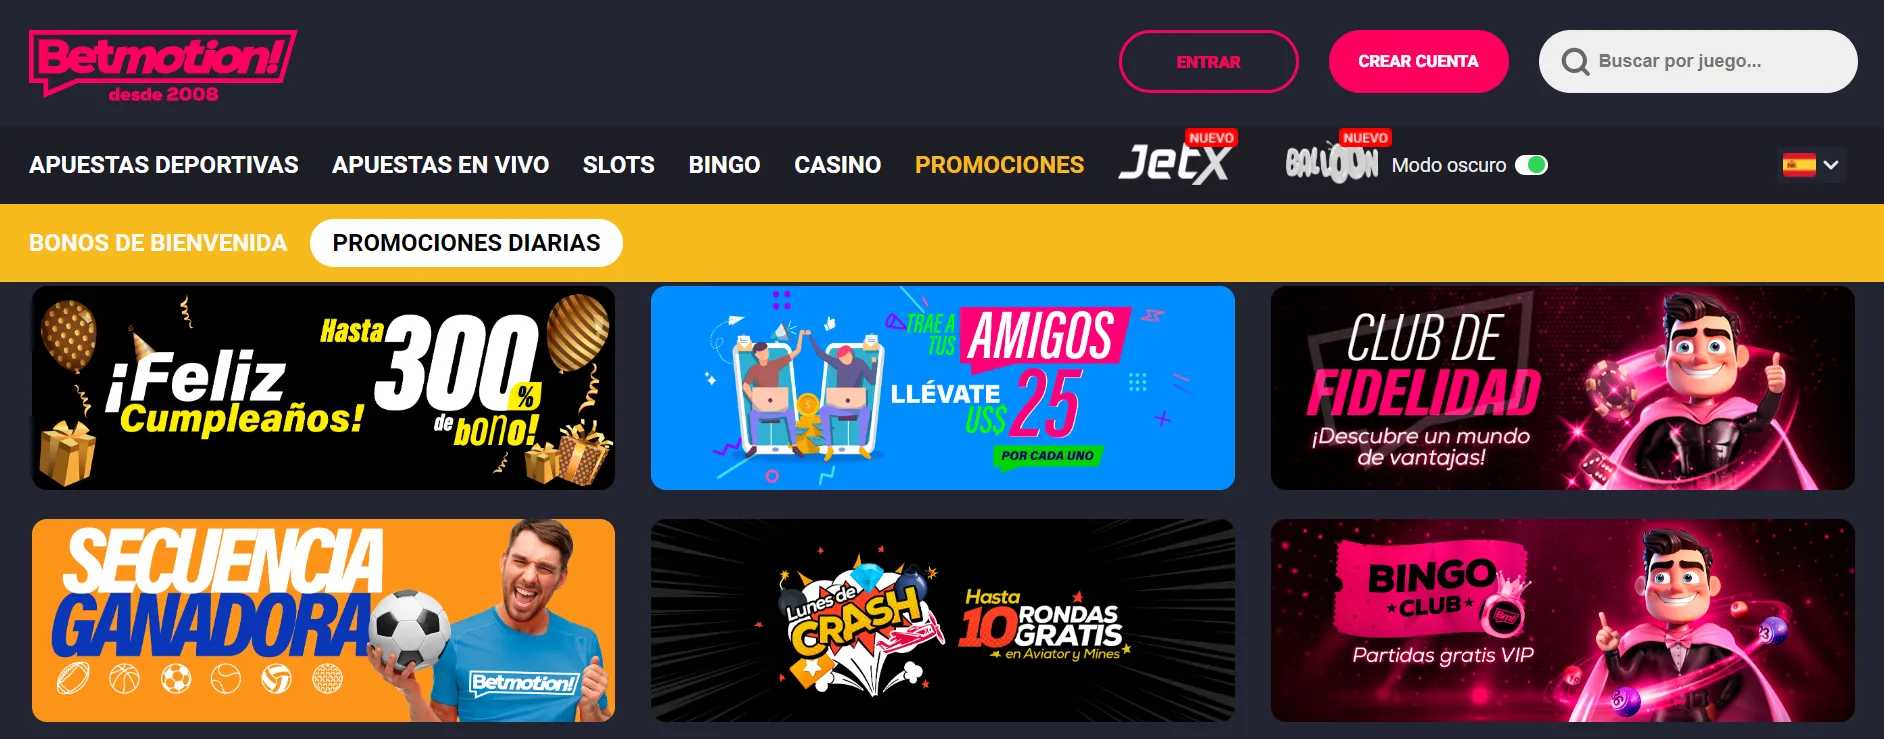 nuevos casinos online betmotion